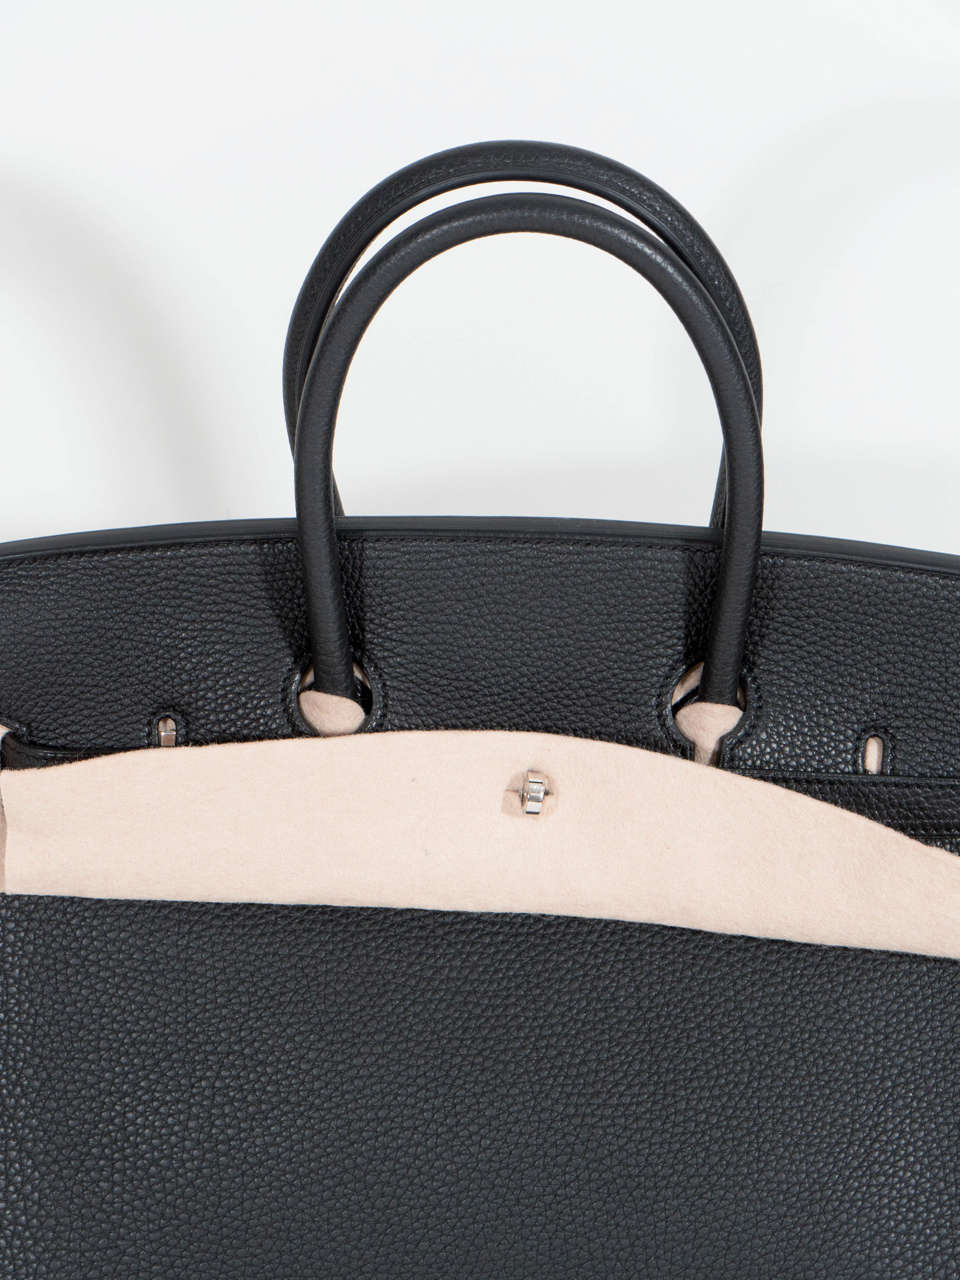 French Hermès Birkin Bag in Black Togo Leather with Palladium Hardware, 2009 For Sale